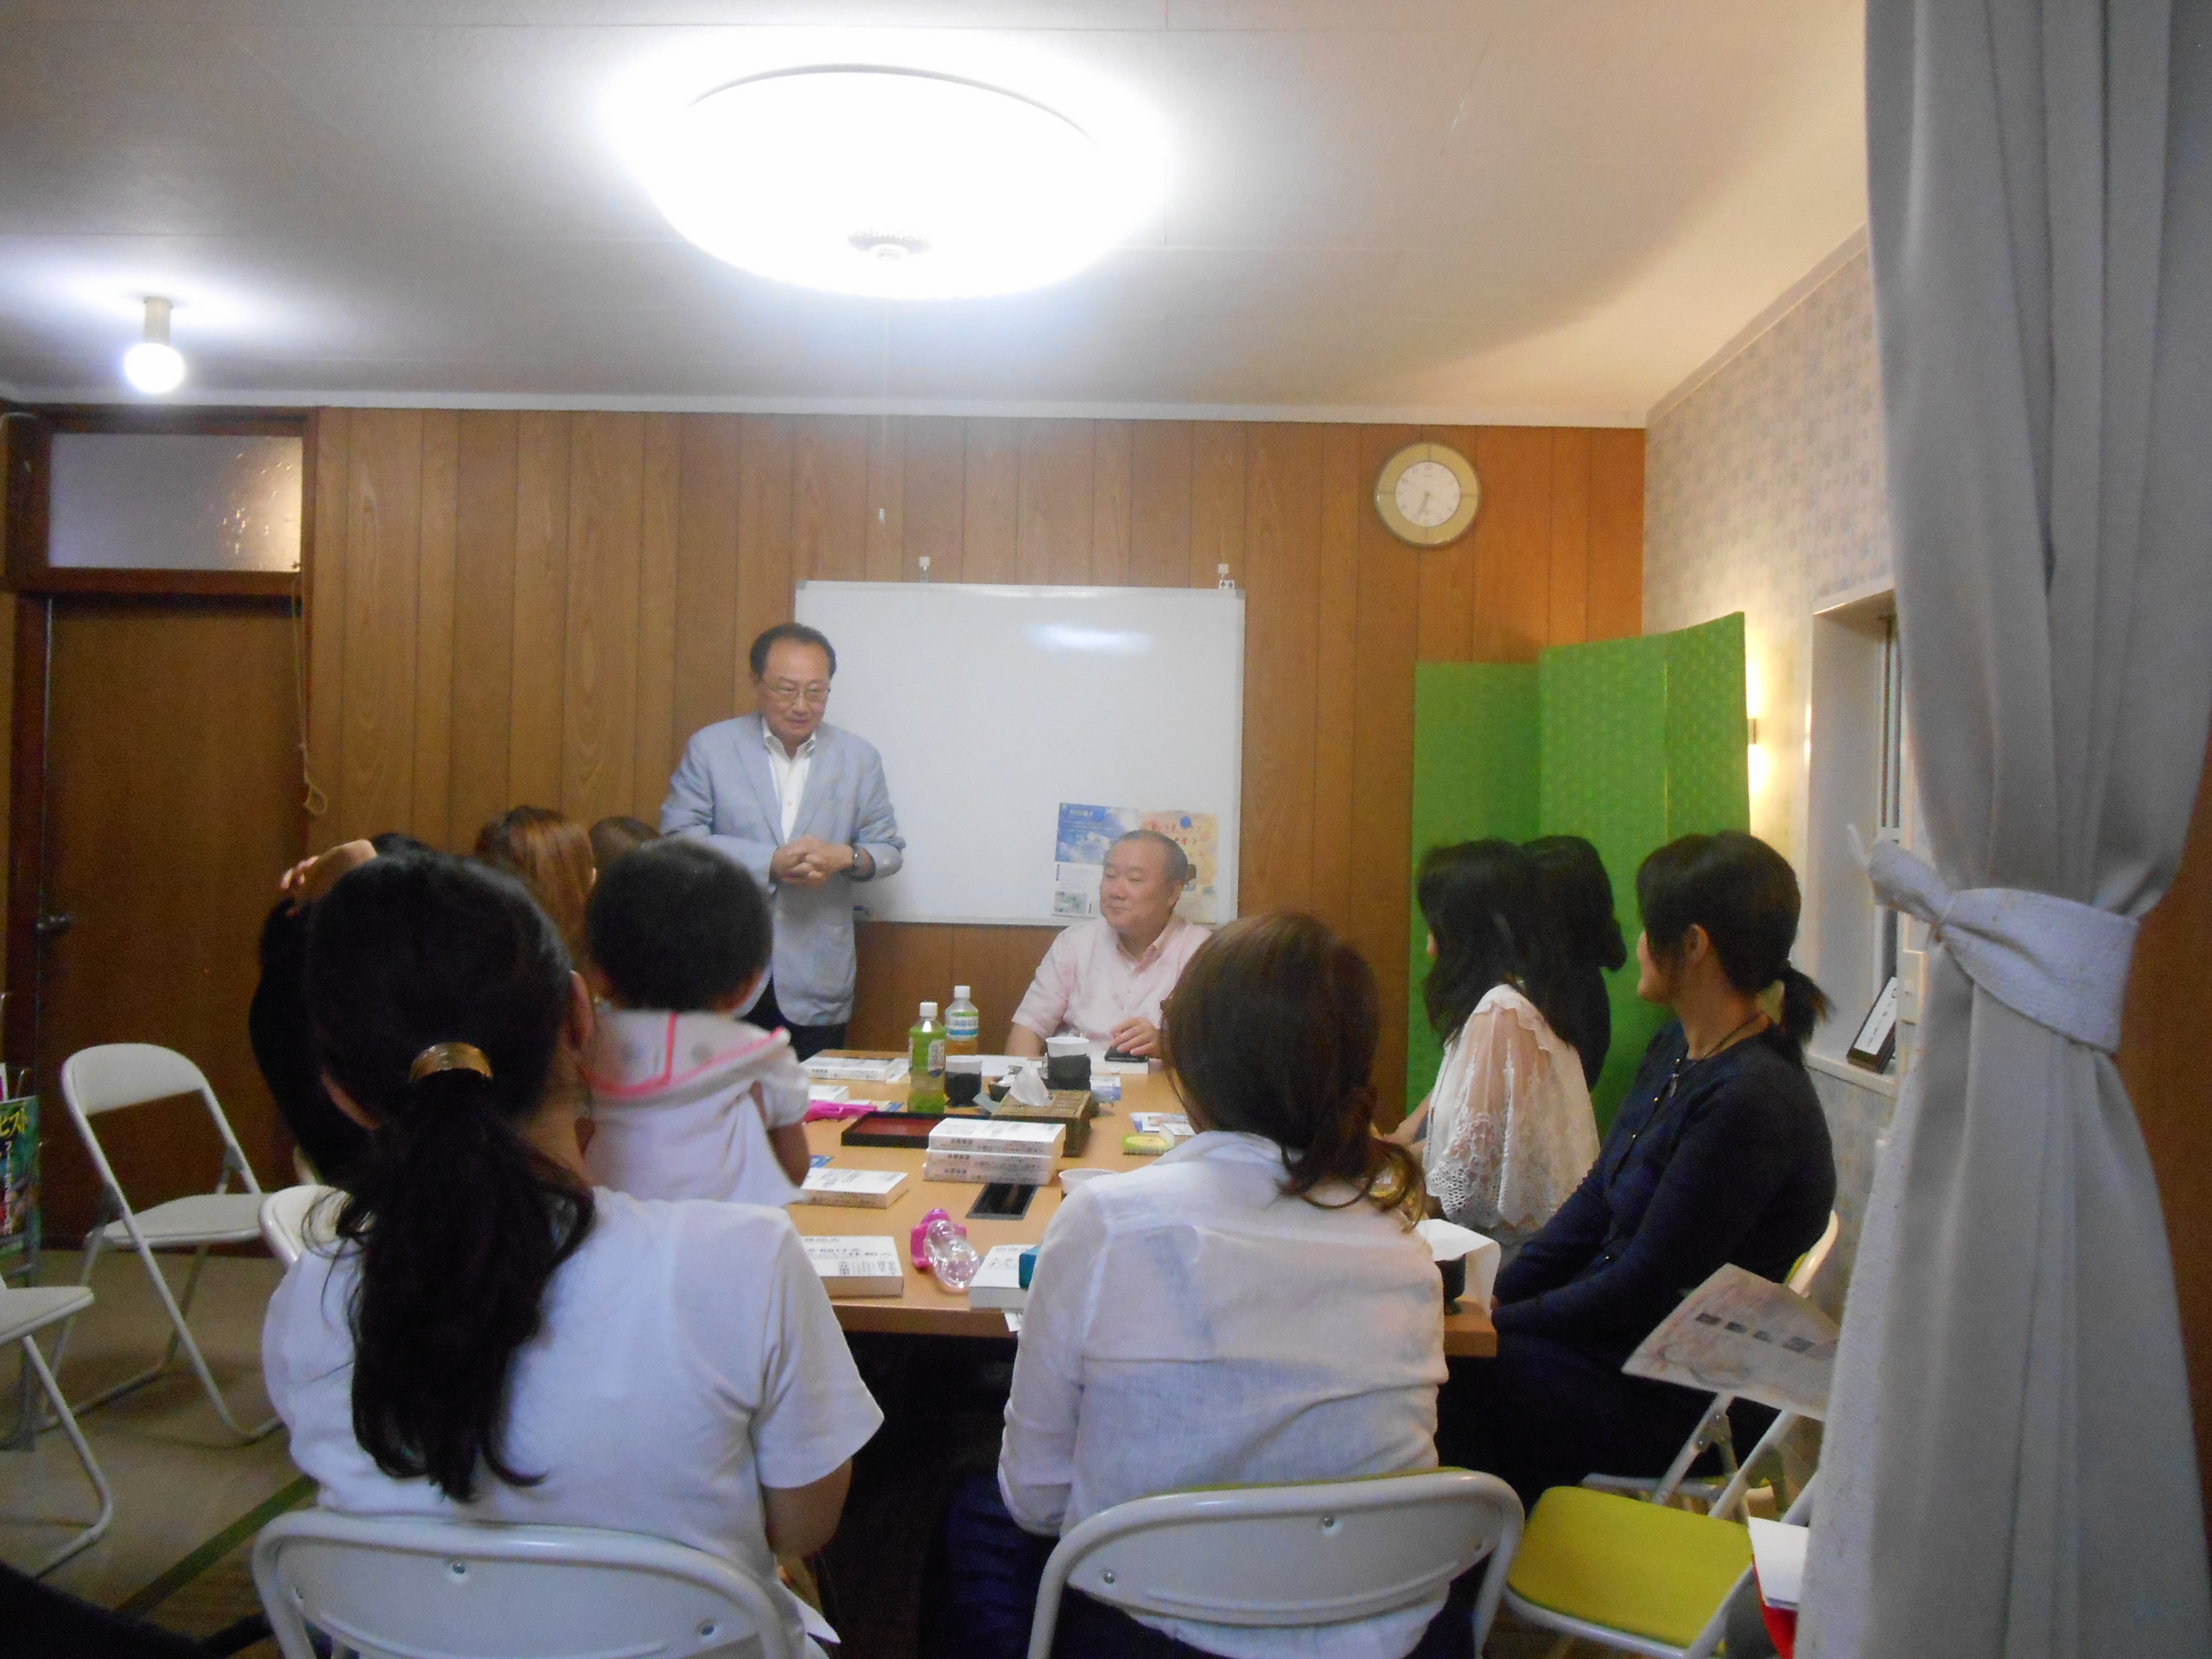 DSCN1638 - 2019年7月16日愛の子育て塾第15期第2講座開催しました。